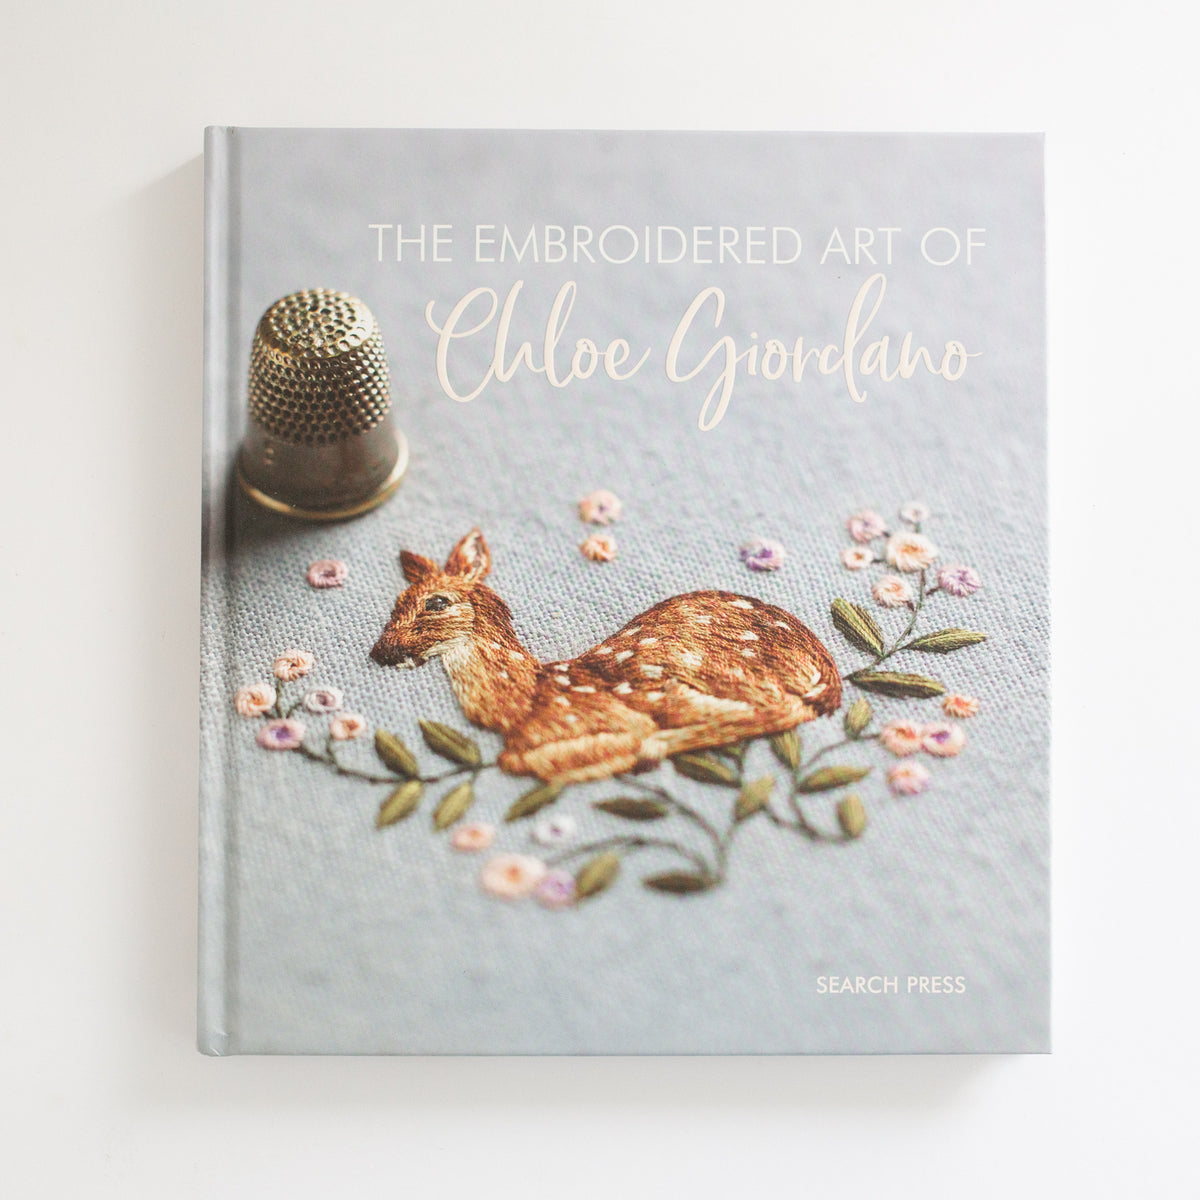 'The Embroidered Art of Chloe Giordano' by Chloe Giordano